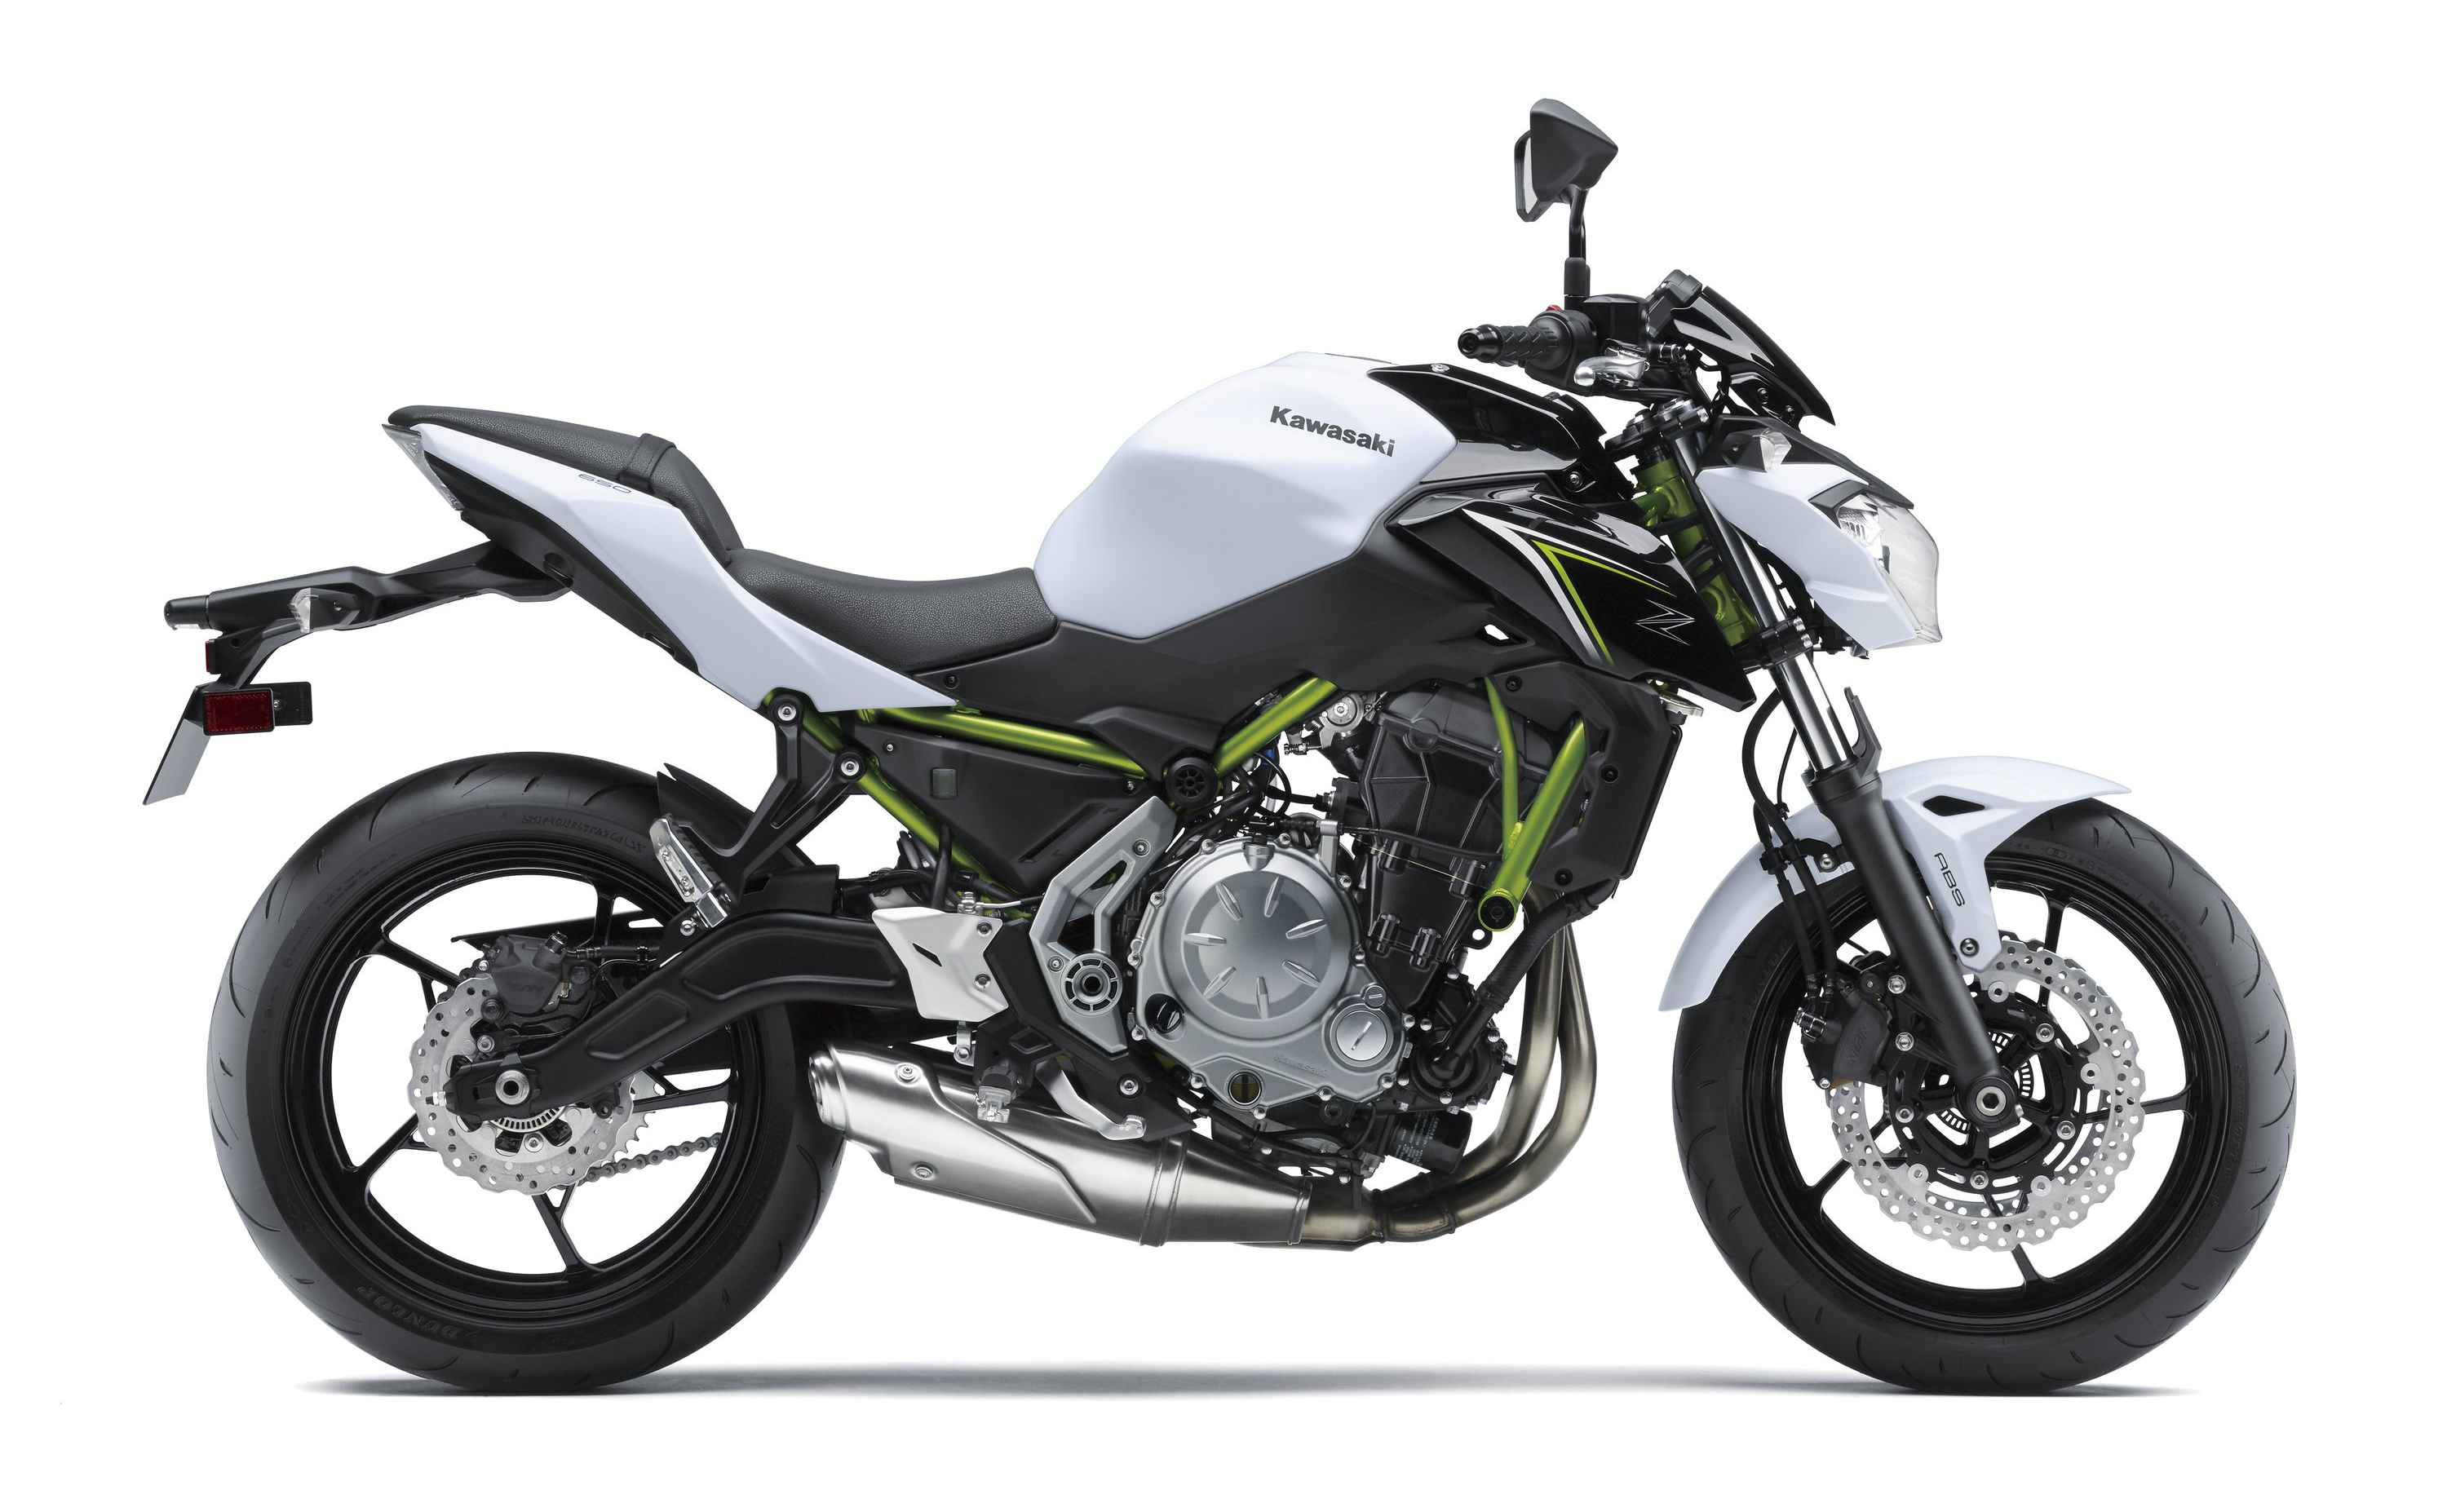 Lad os gøre det Rodet Subjektiv Kawasaki Z650 vs. Suzuki SV650 vs. Yamaha FZ-07 - COMPARISON TEST | Cycle  World